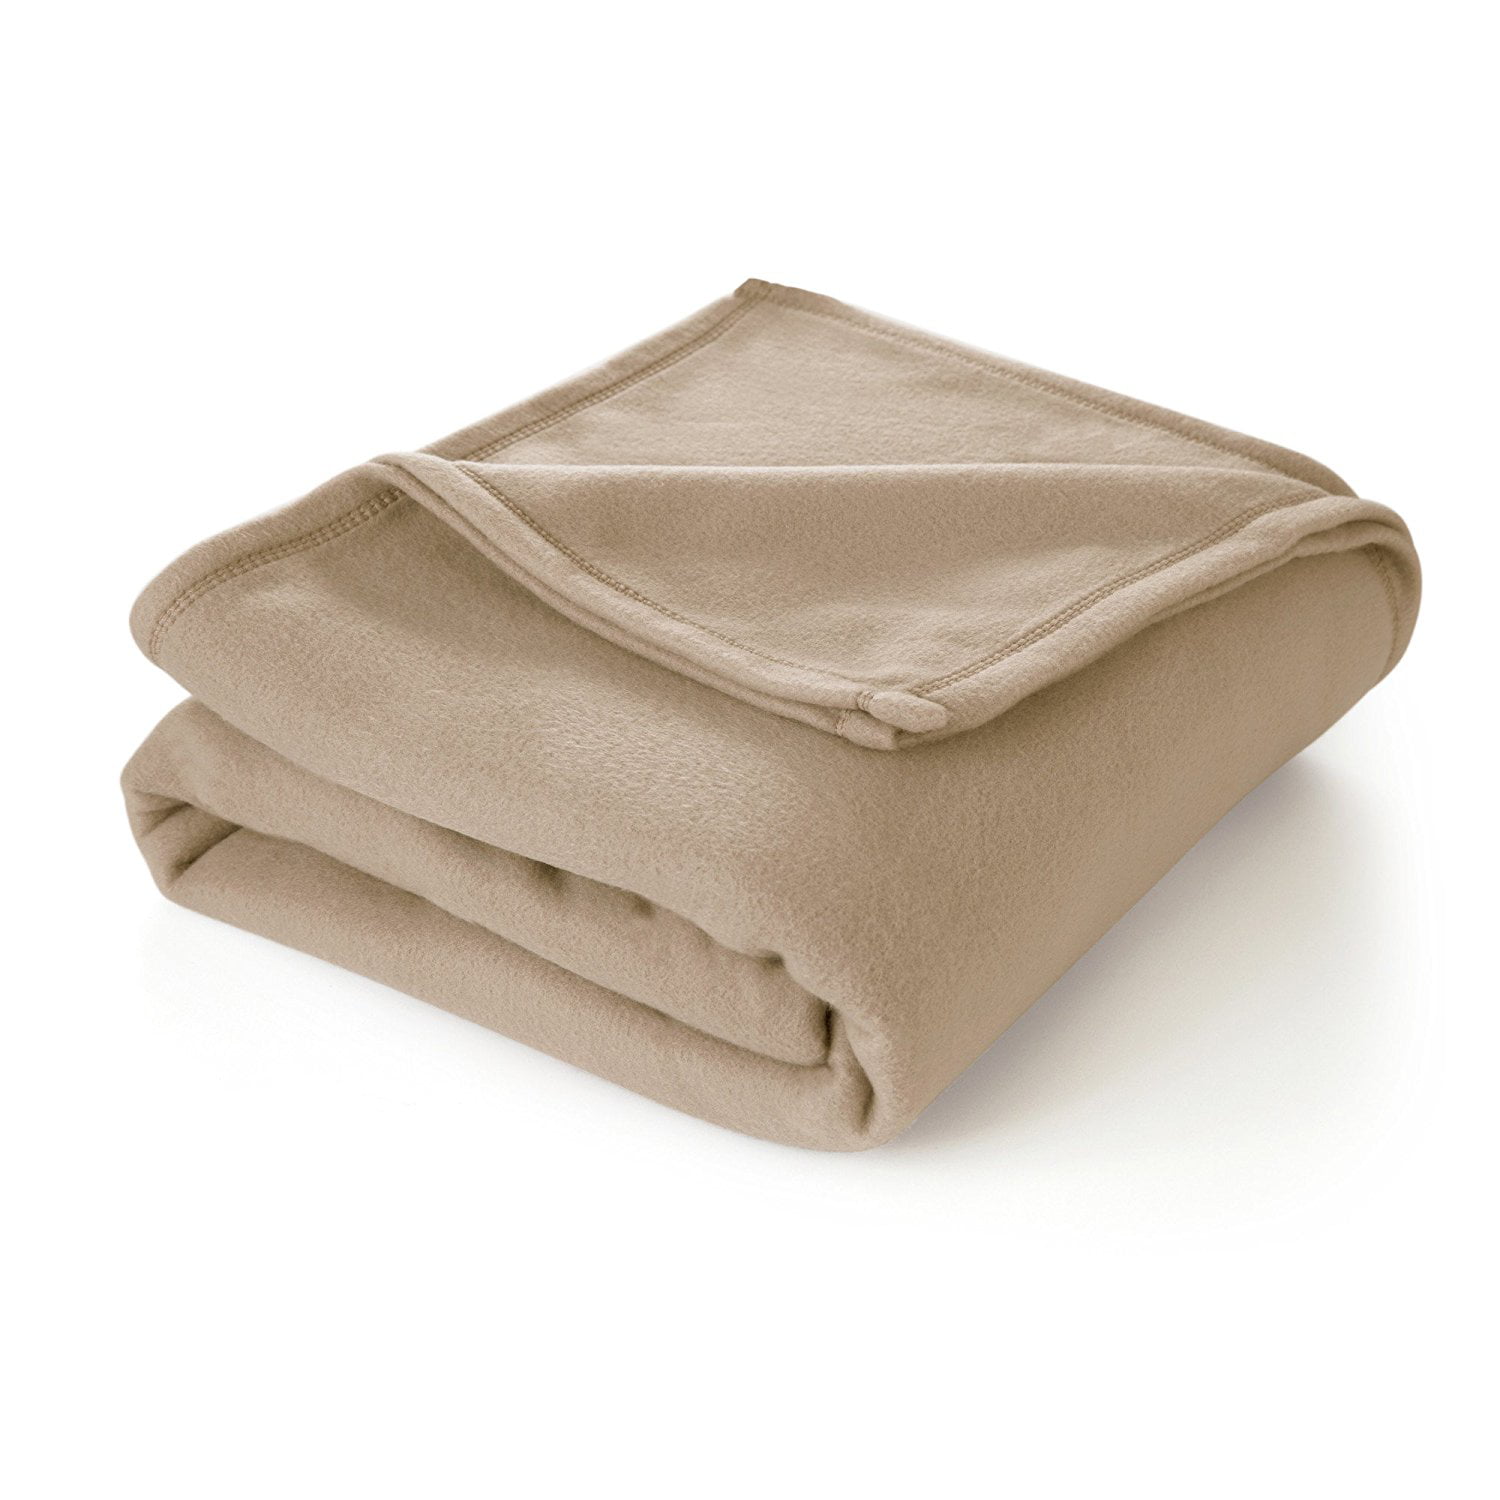 Lightweight Warm Martex Super Soft Fleece Blanket Navy Twin Pet-Friendly Sofa & Dorm Throw for Home Bed